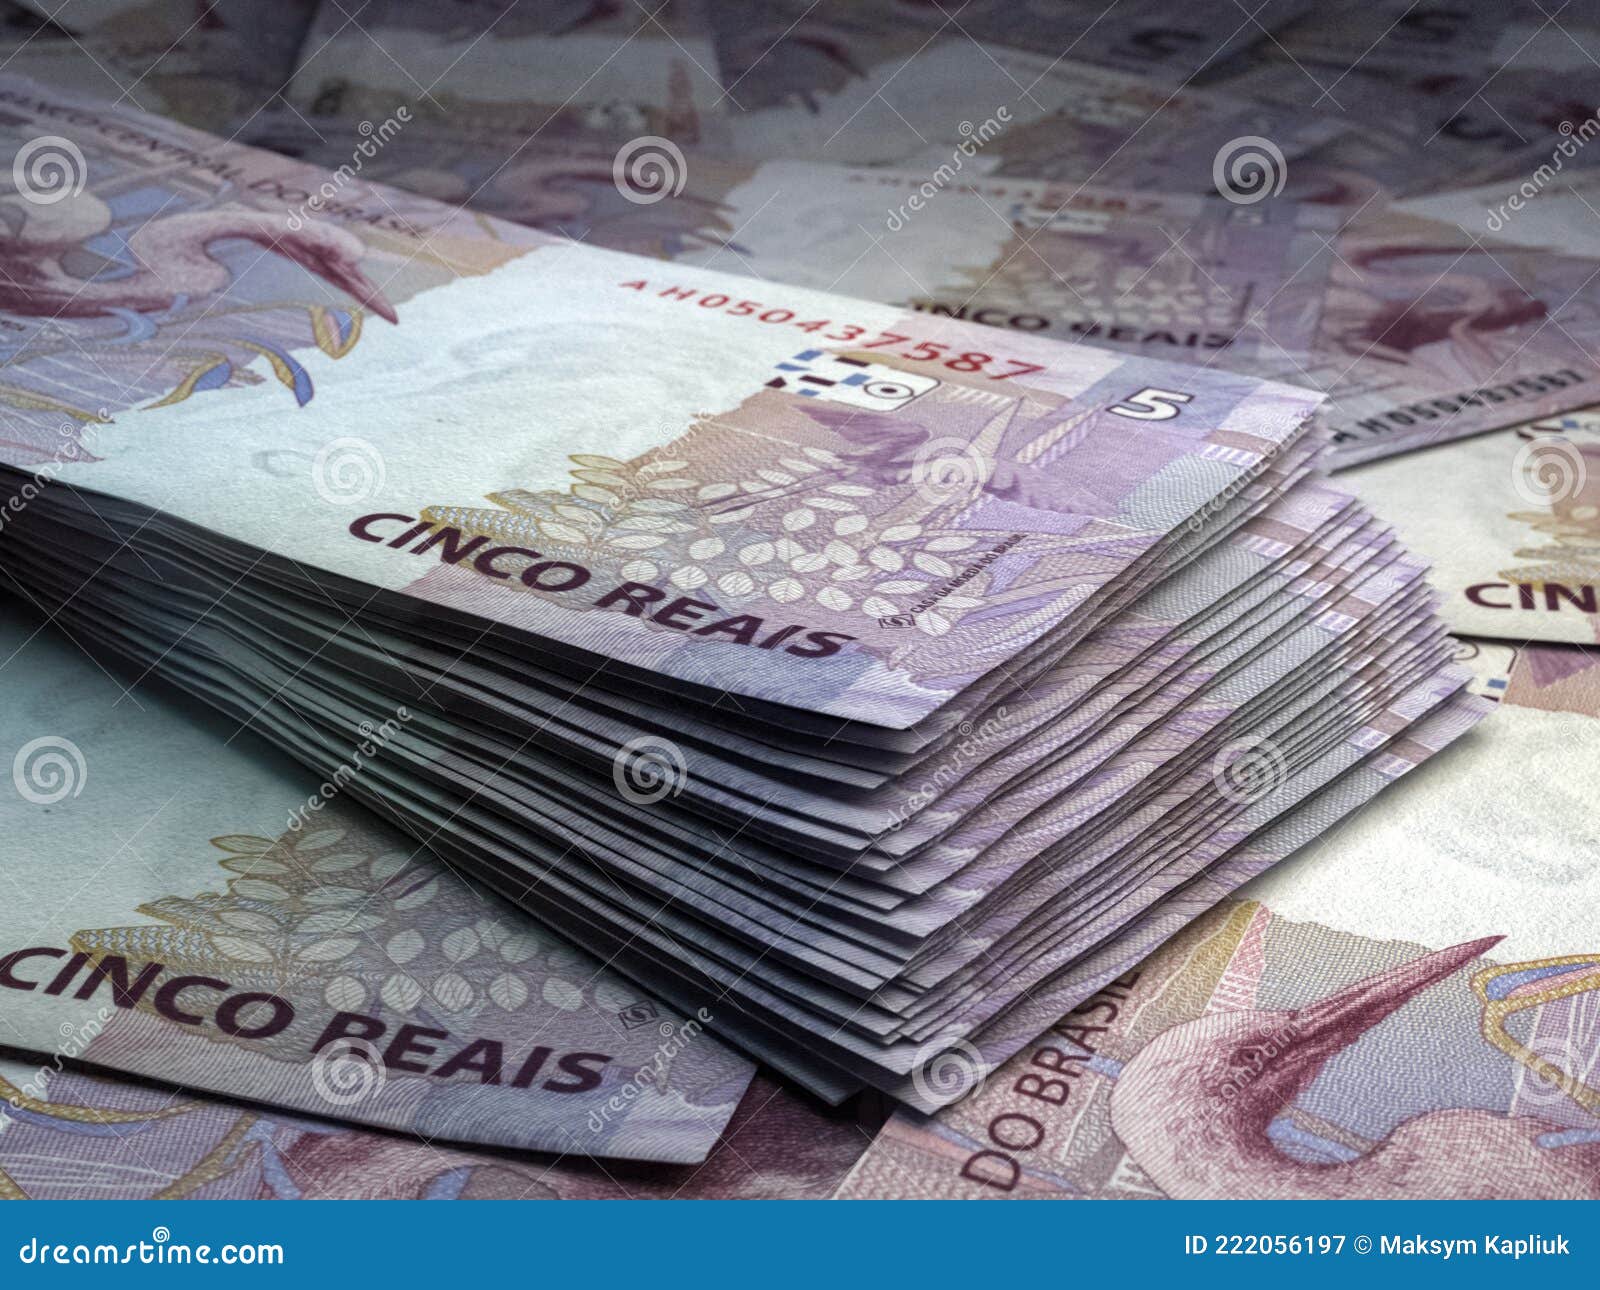 brazilian money. brazilian real banknotes. 5 brl reals bills